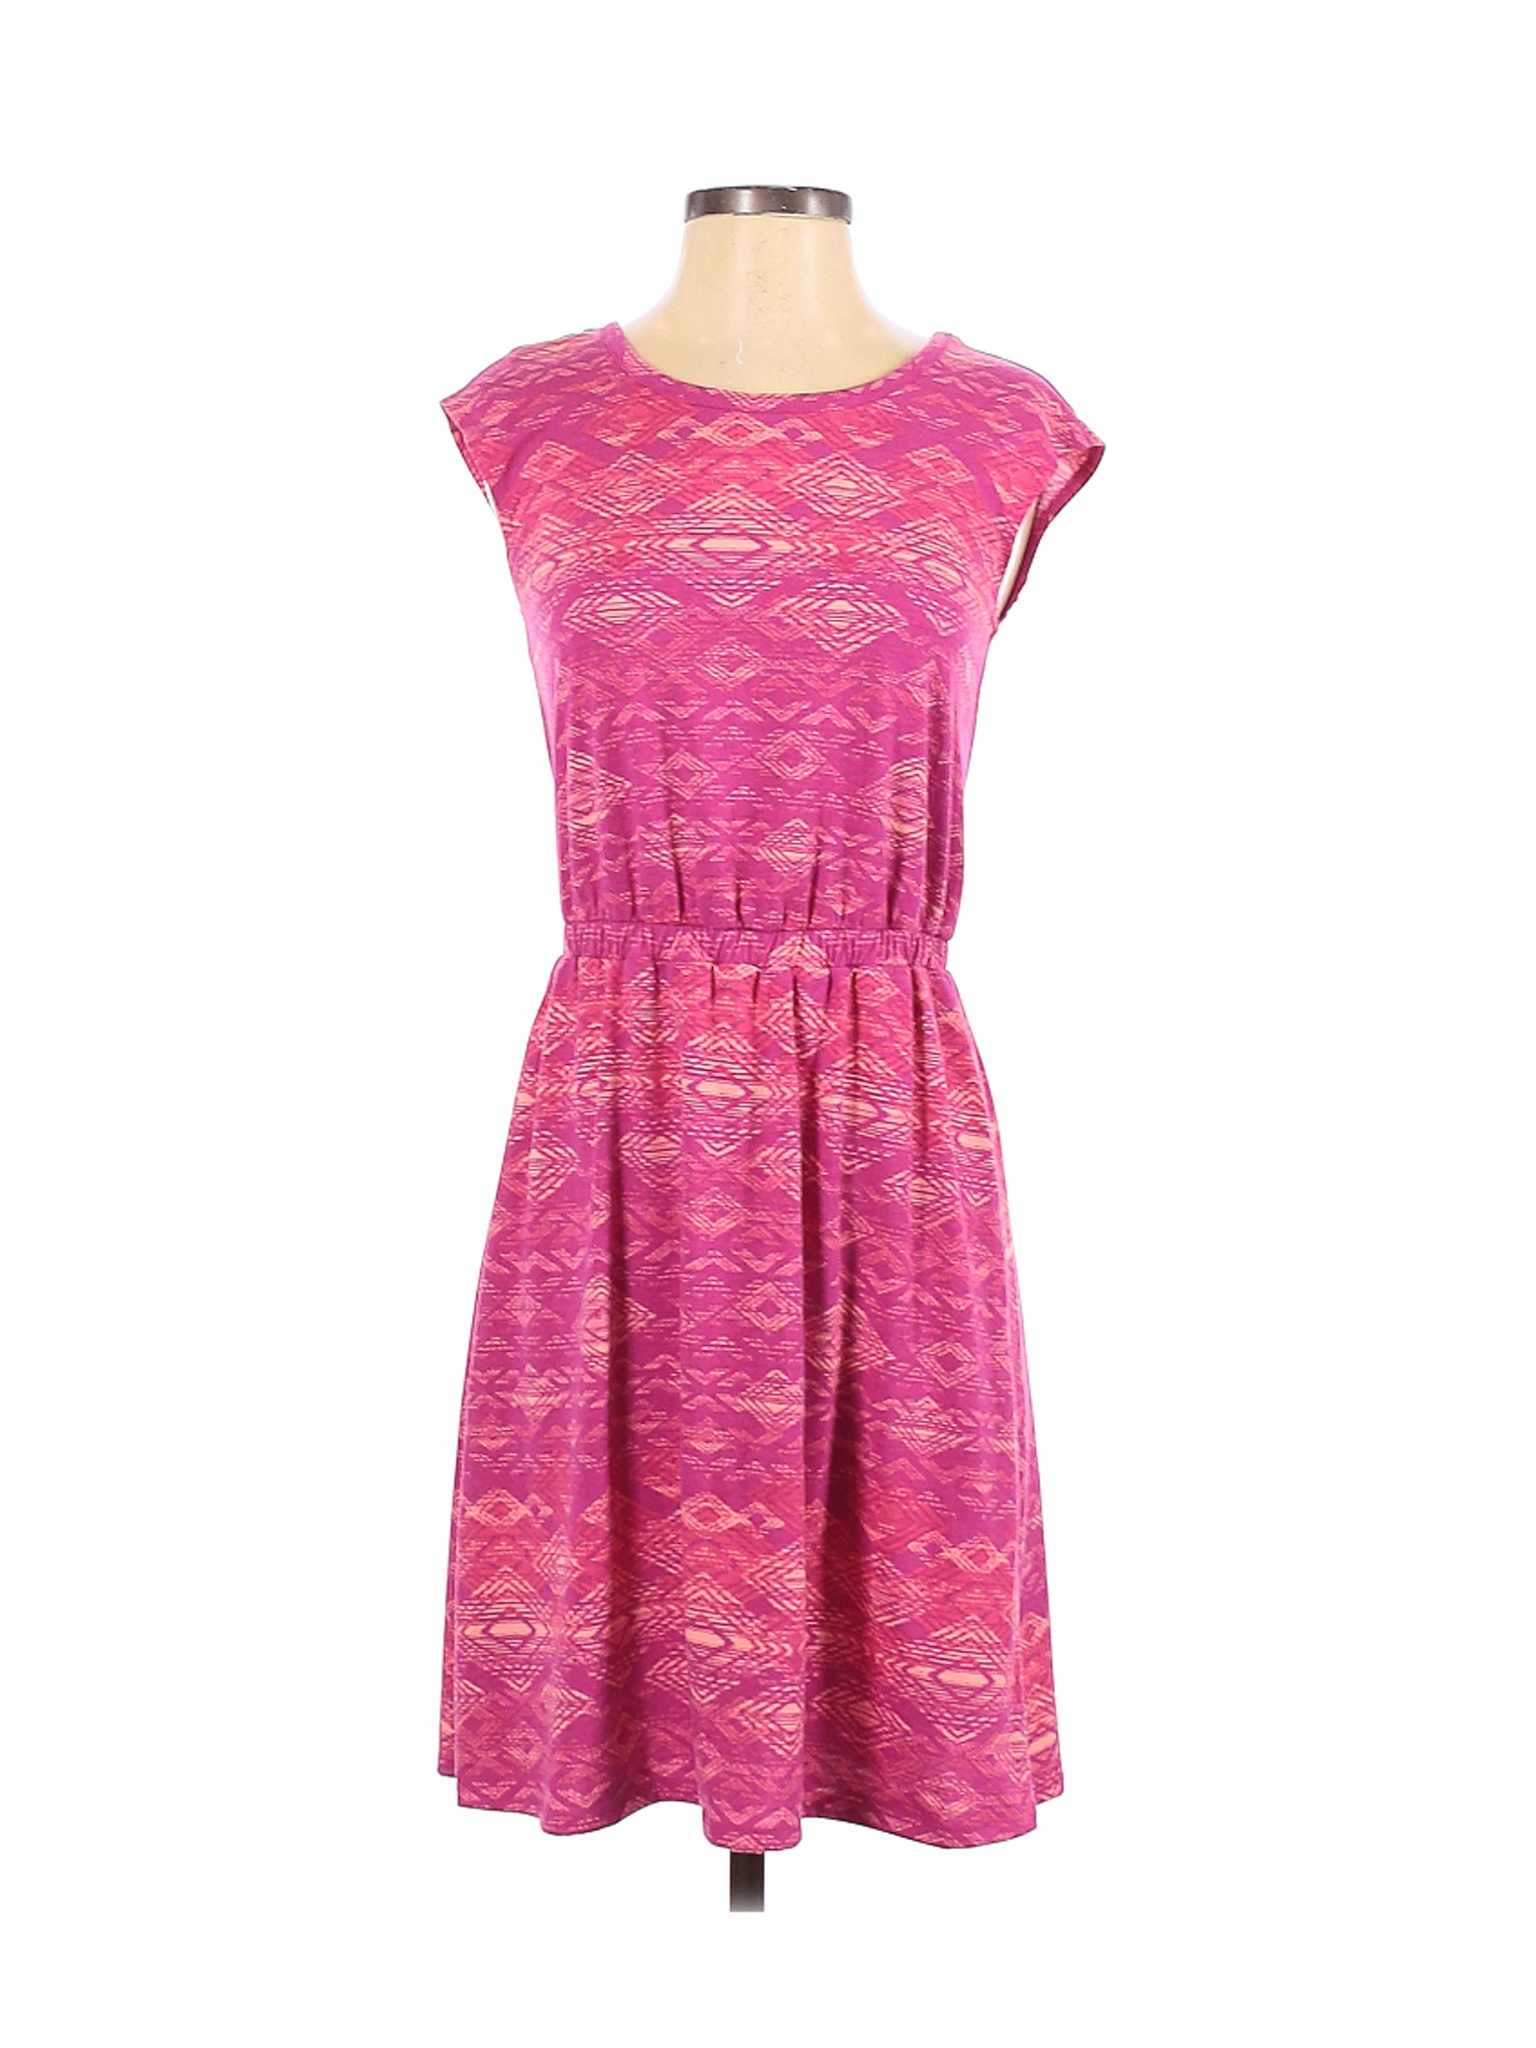 SONOMA life + style Women Pink Casual Dress S | eBay